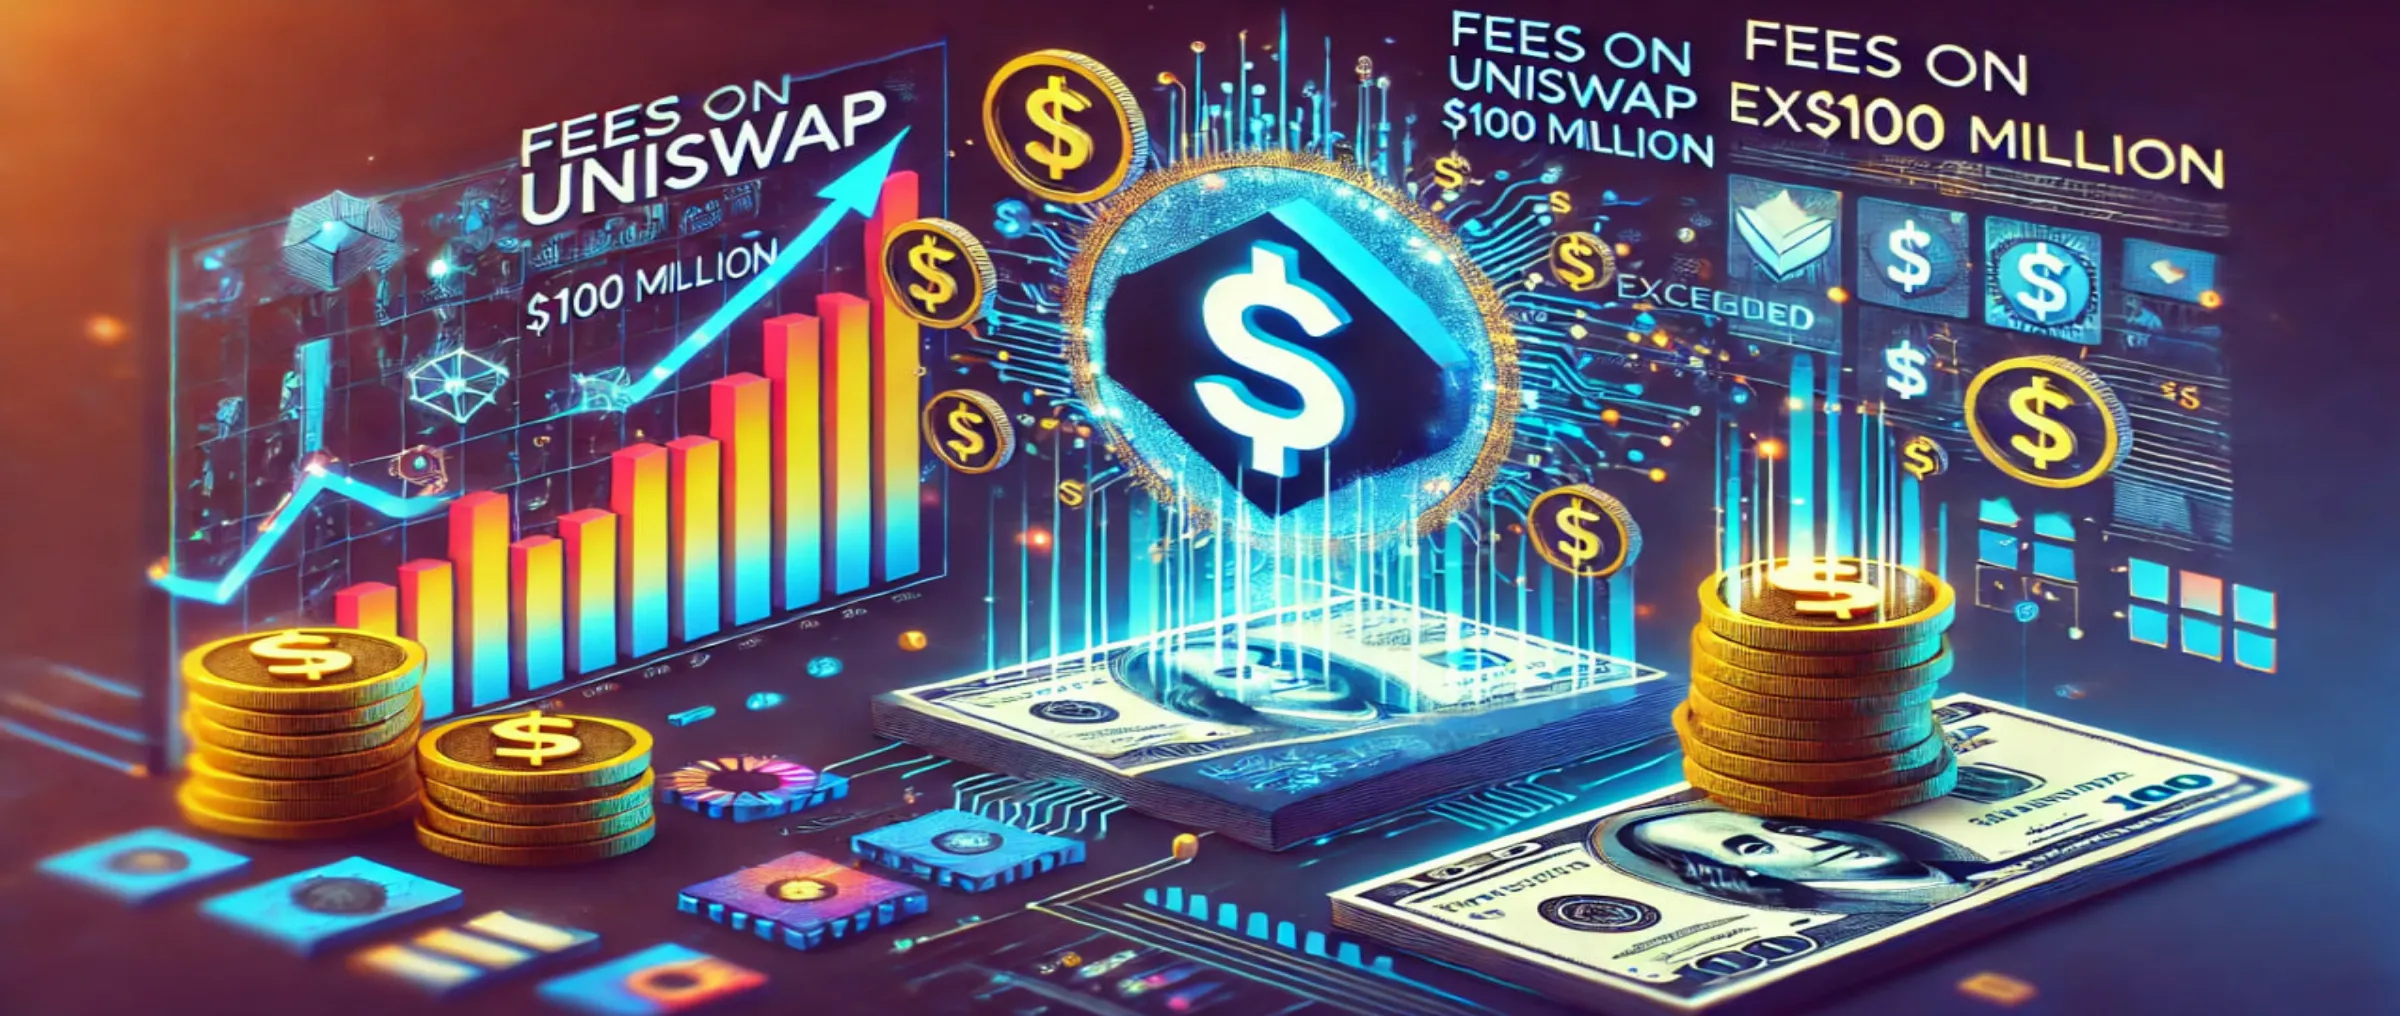 Fees on the Uniswap crypto exchange have exceeded $100 million